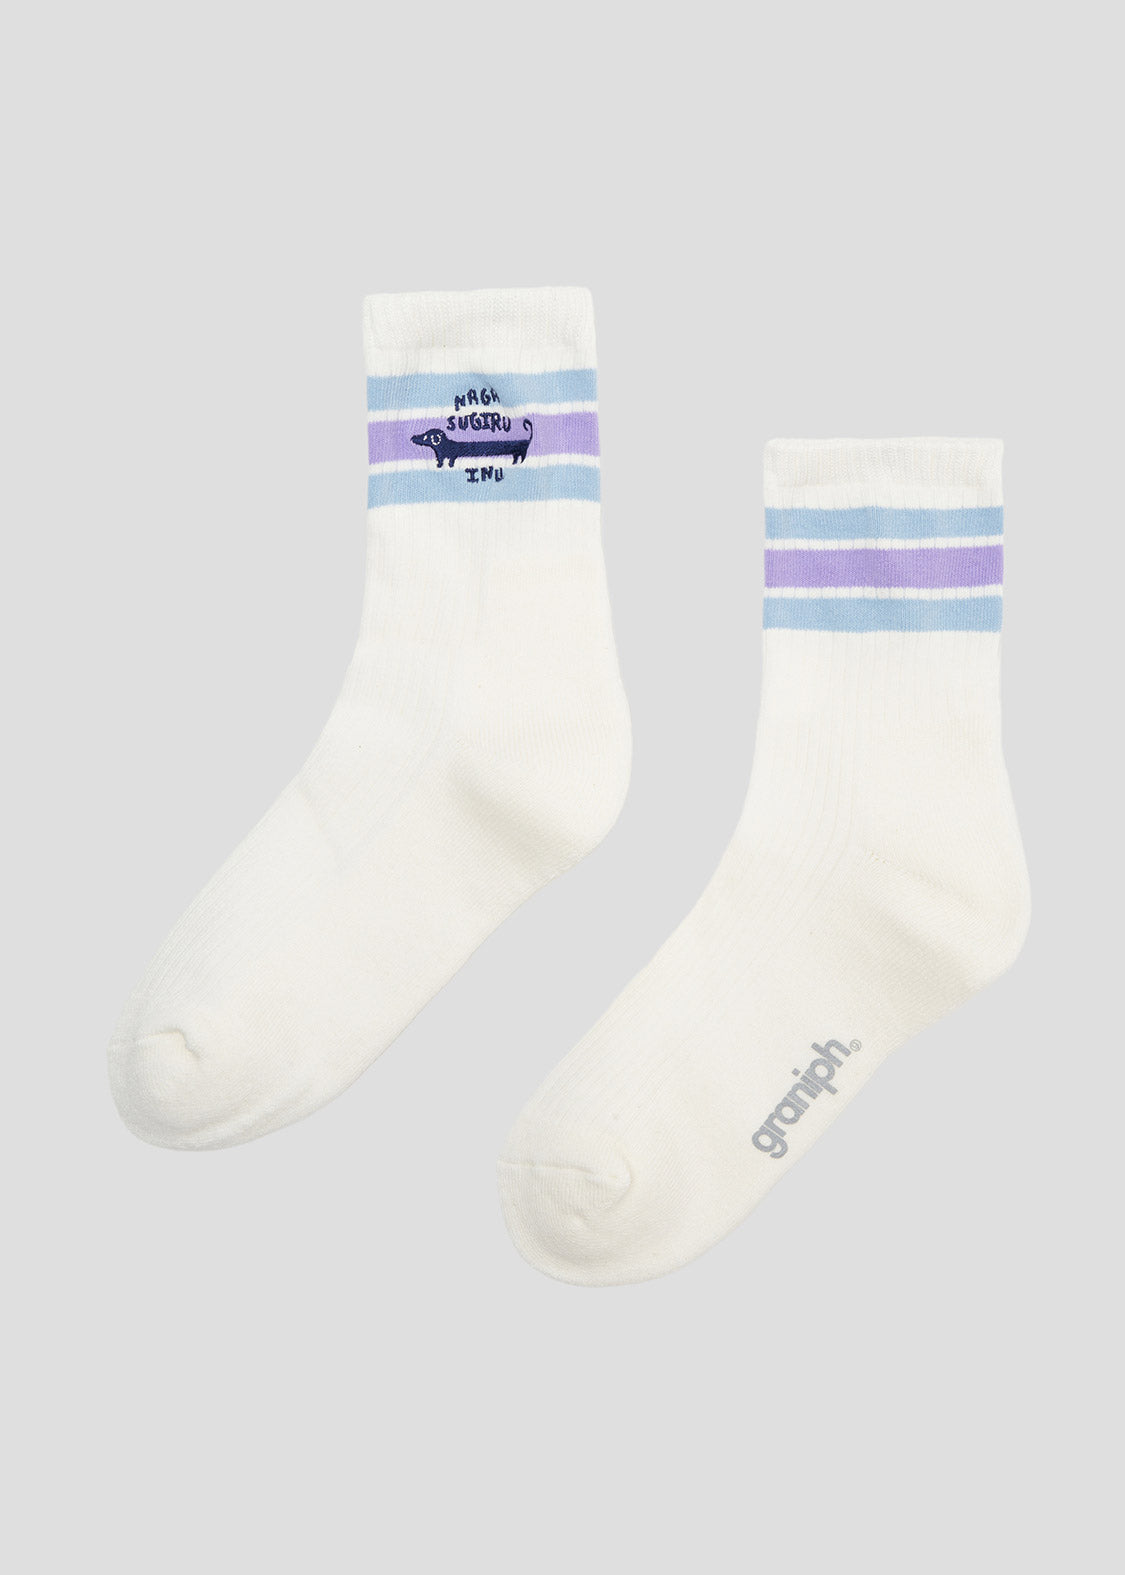 Middle Socks (Nagasugiru Inu 04)